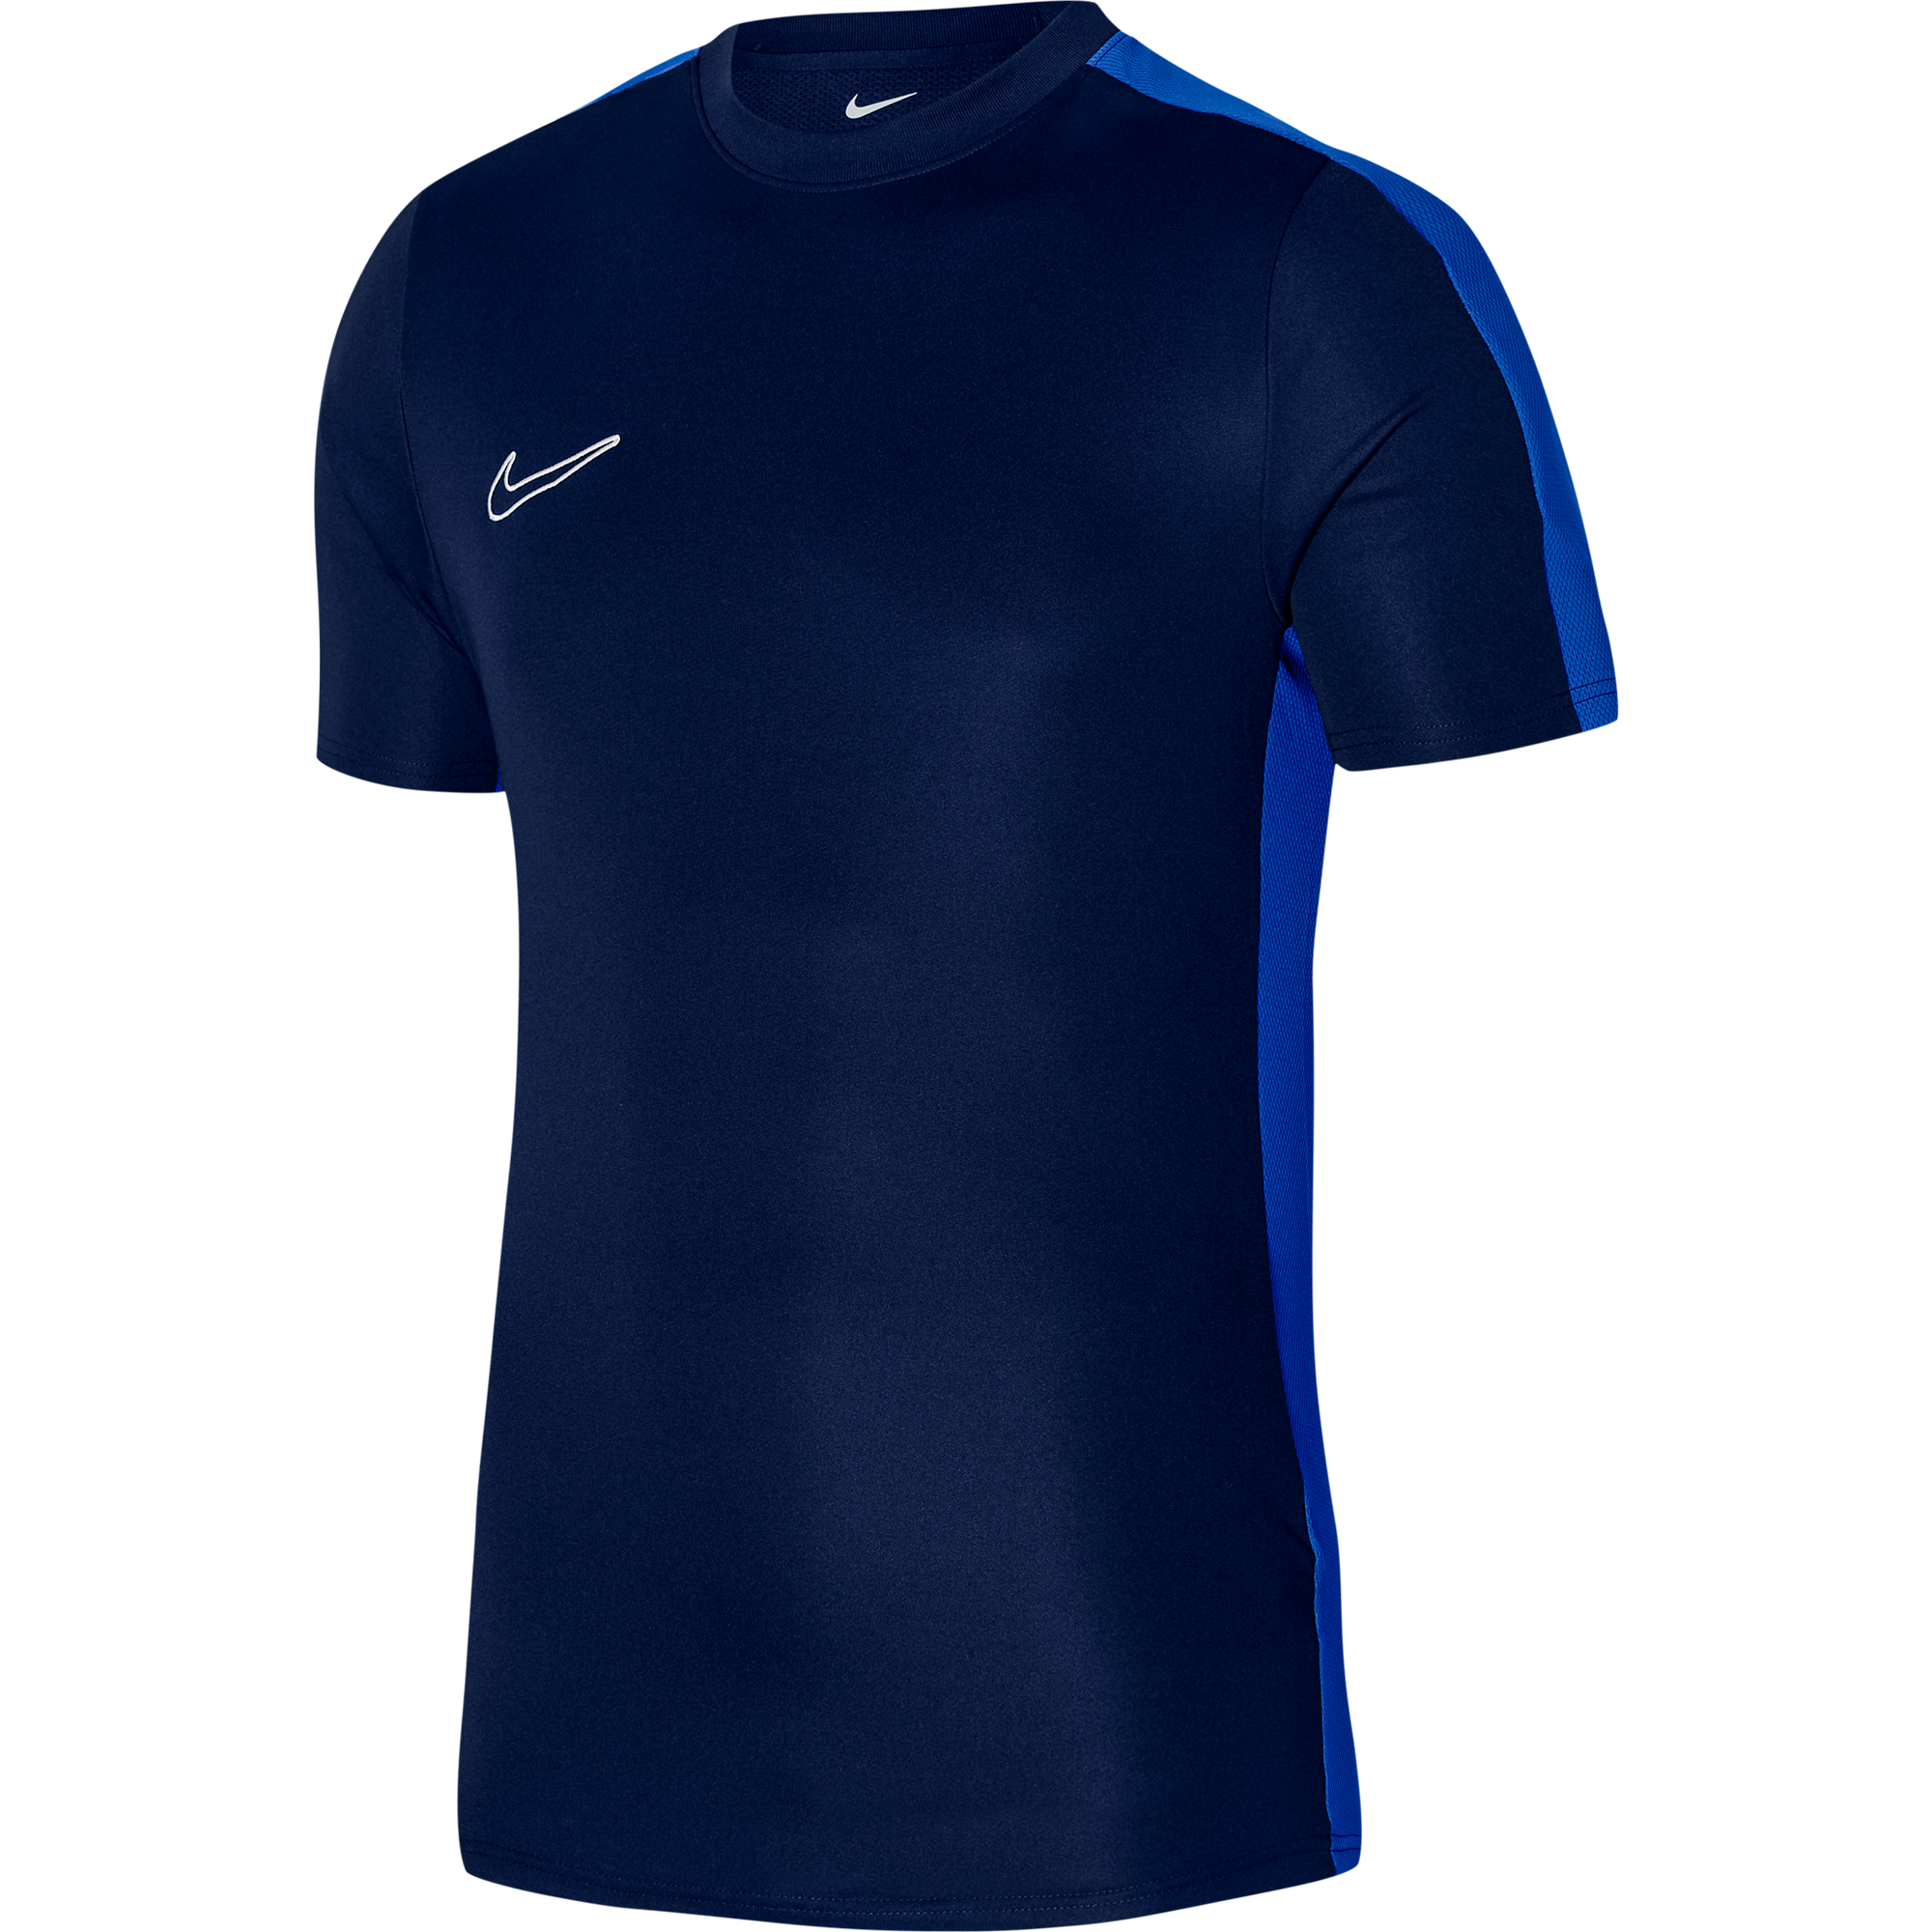 Nike Dri FIT Short Sleeve Shirt in Obsidian/Royal Blue/White